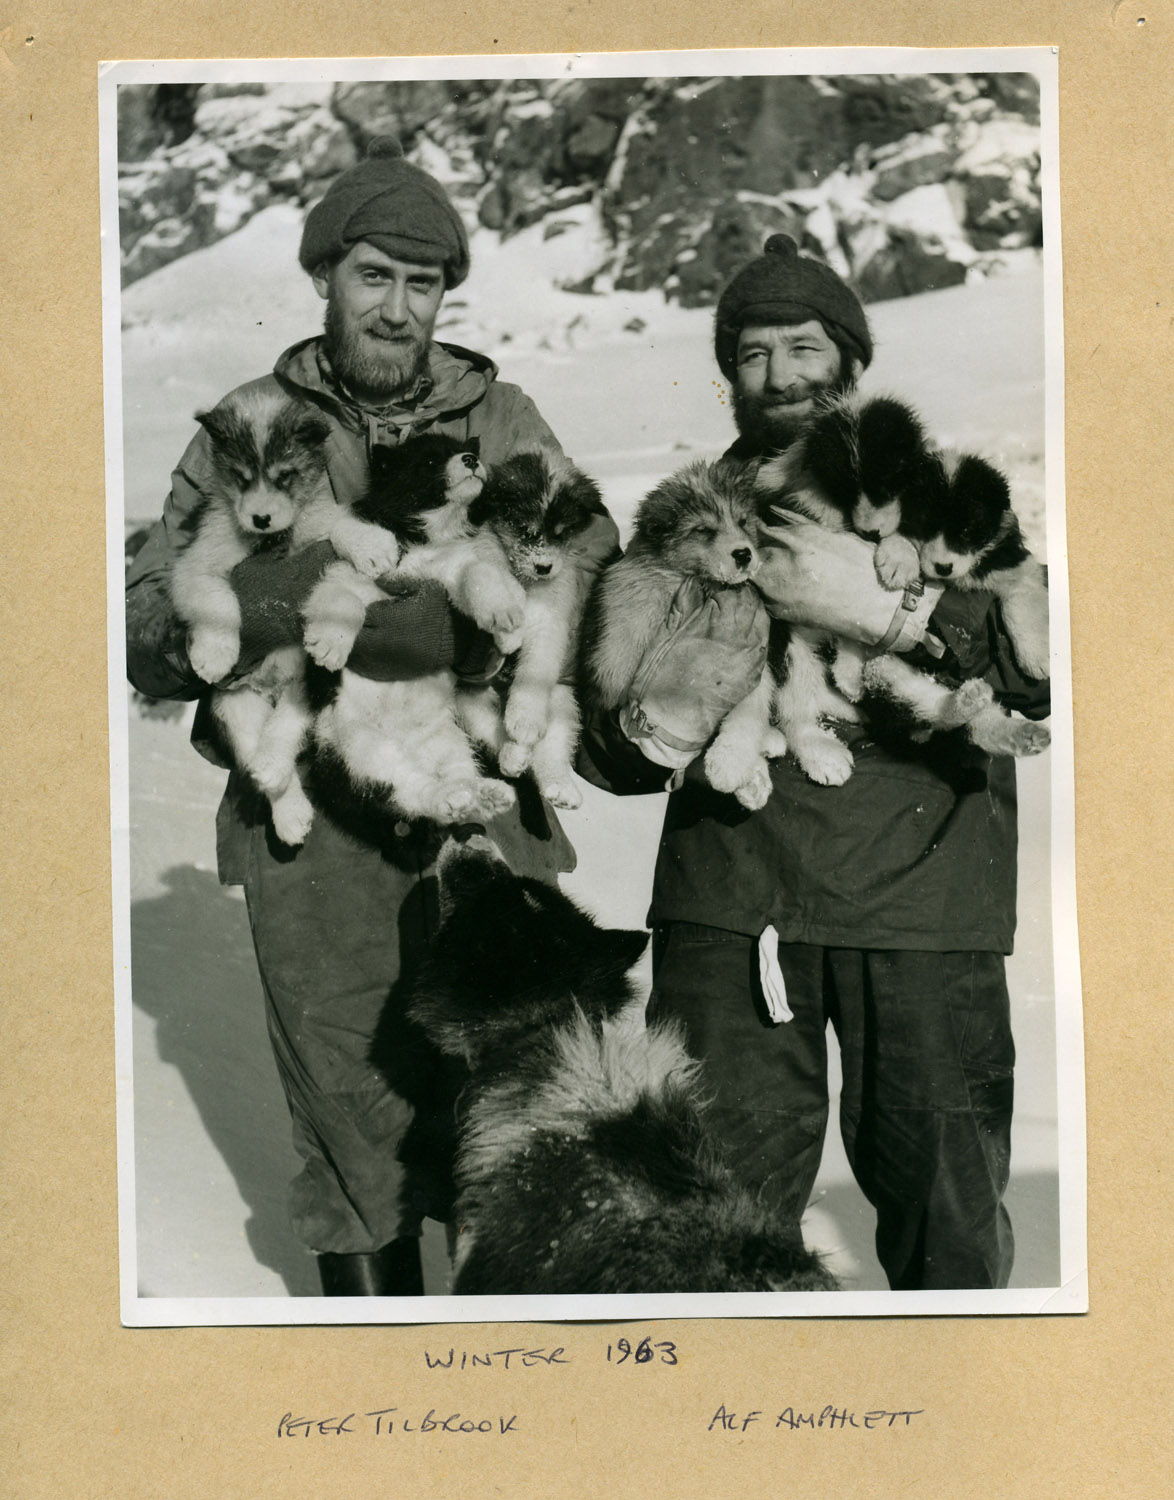 Peter Tilbrook, Alf Amphlett and pups 1963